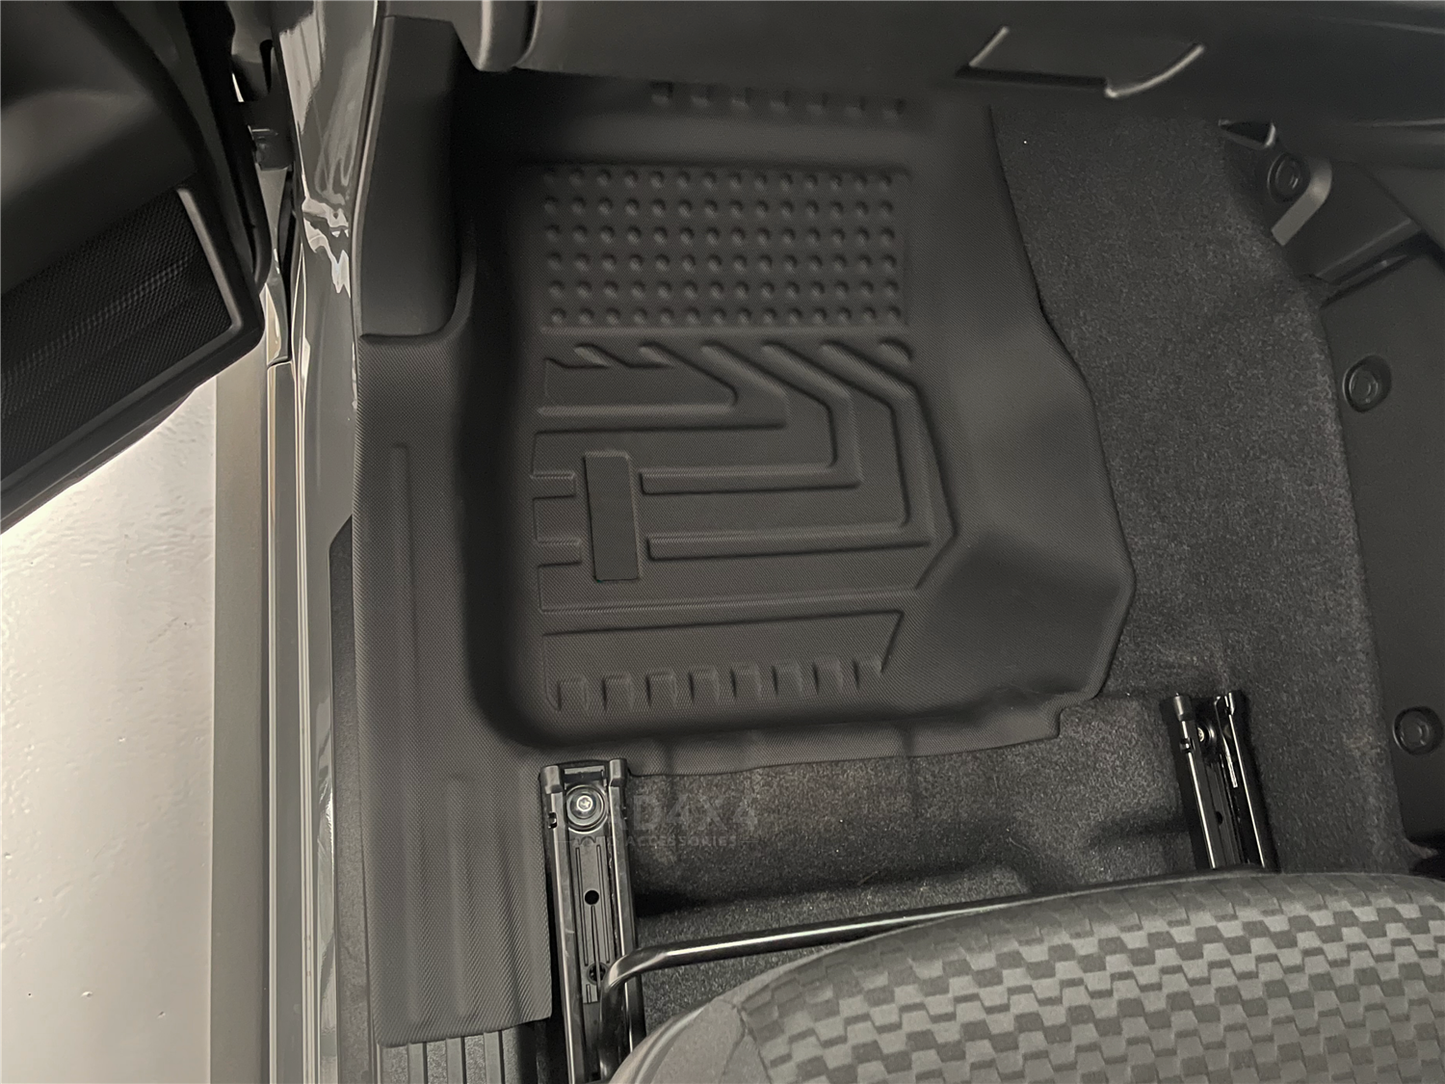 2 Rows 5D TPE Floor Mats & Cargo Mat for Suzuki Jimny 3 Doors Manual Transmission 2018-Onwards Door Sill Covered Car Mats + Boot Mat Liner